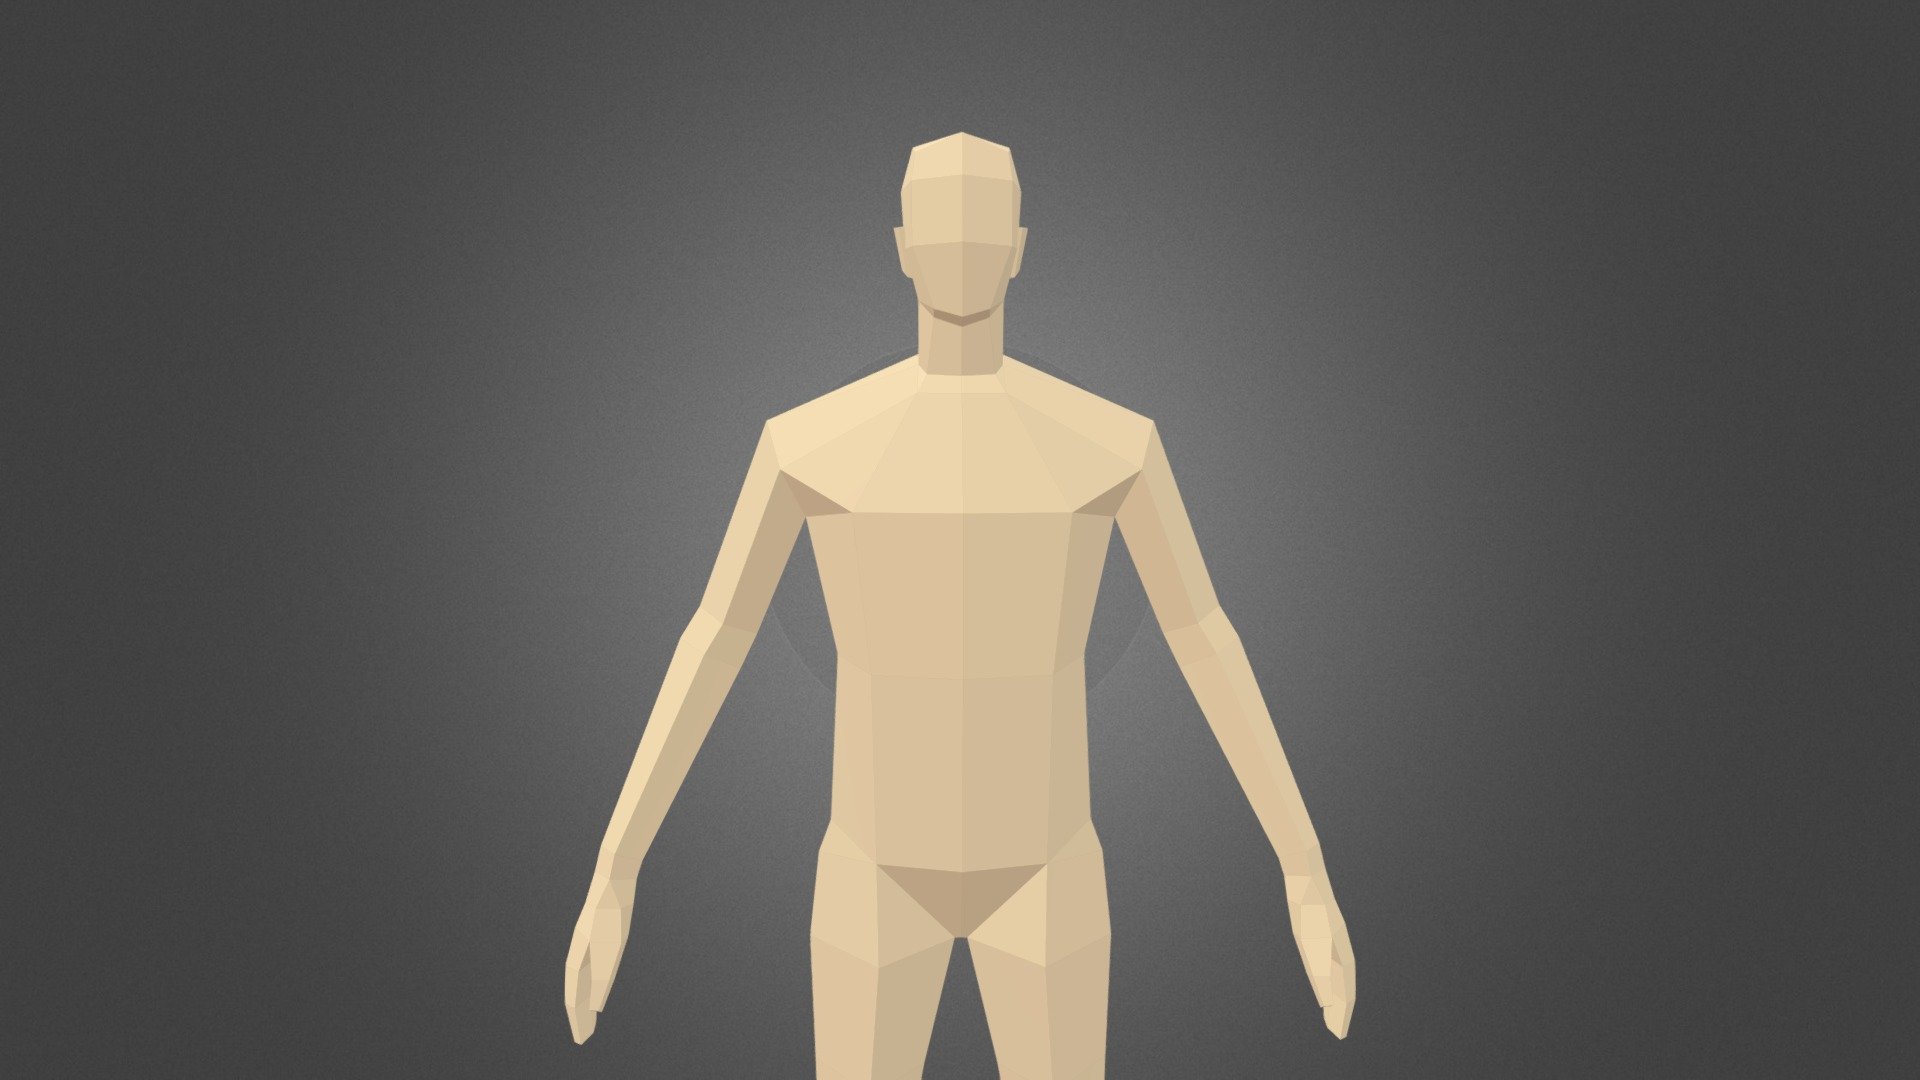 Human Body Anatomy 3d Model Free Download - Low-poly Male Body ...